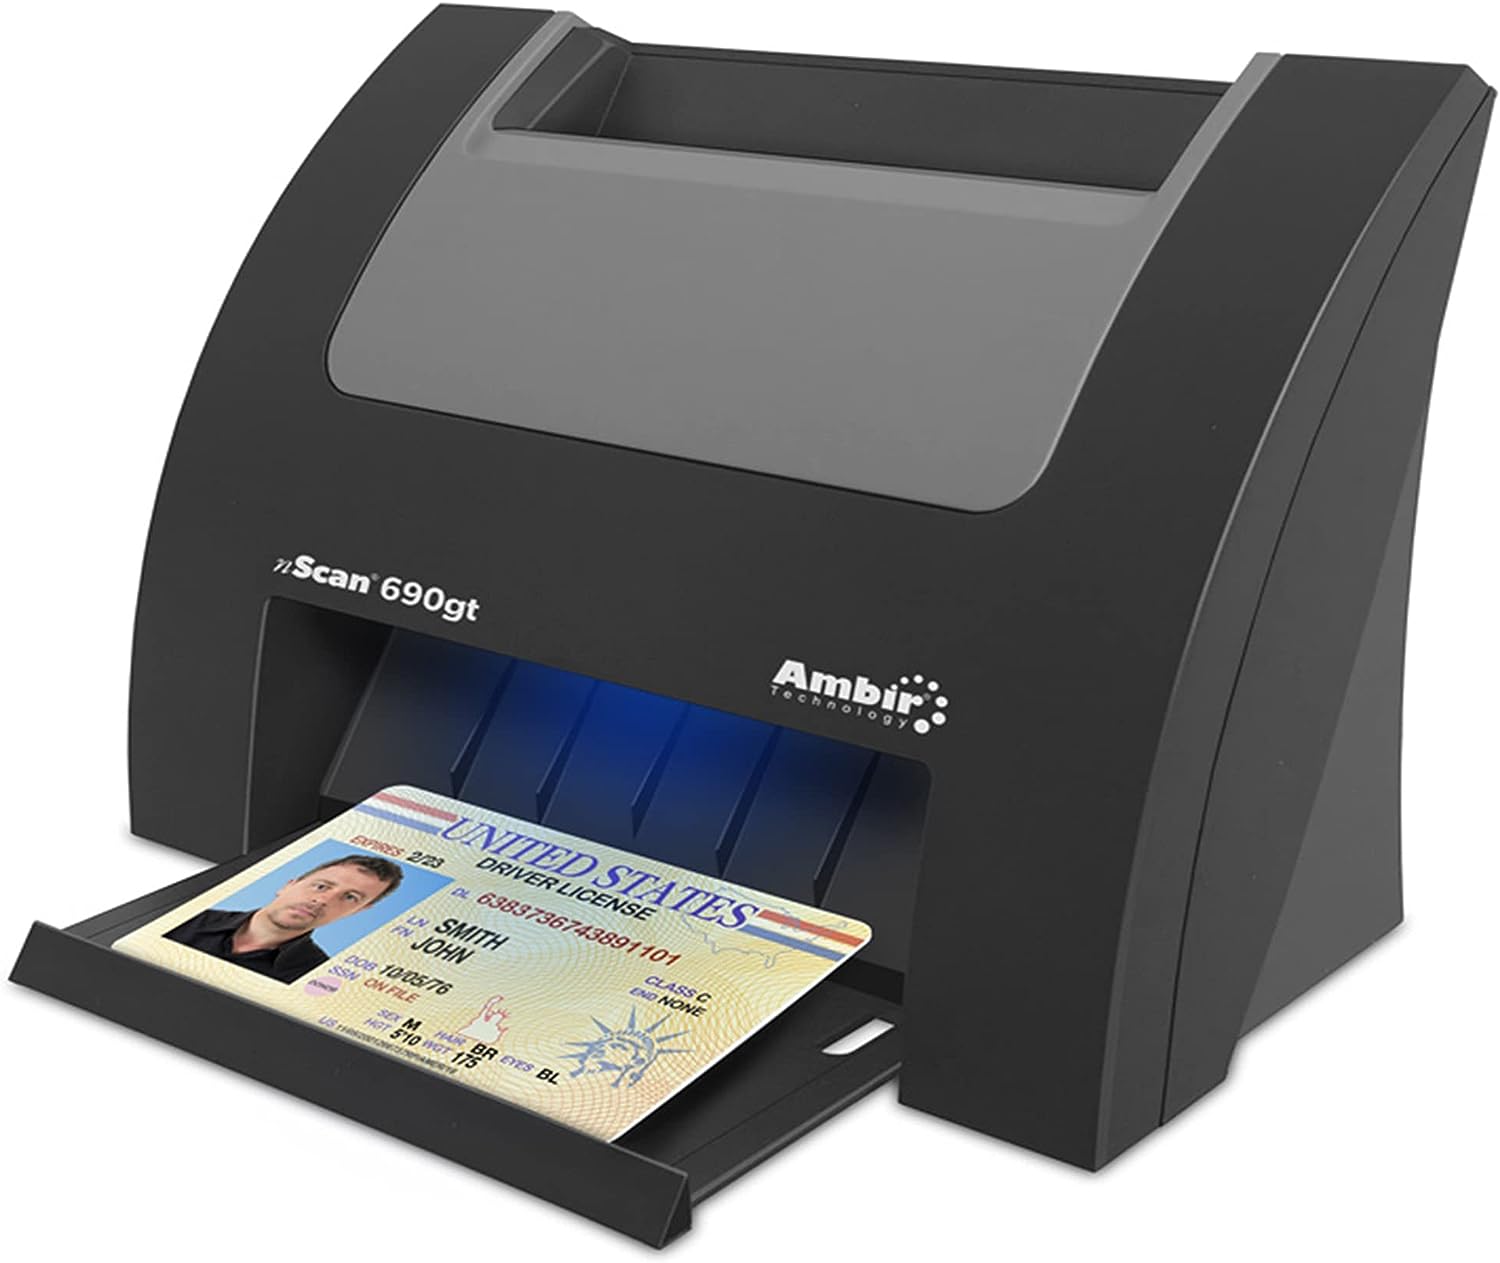 Ambir nScan 690gt High-Speed Vertical Card Scanner for [...]